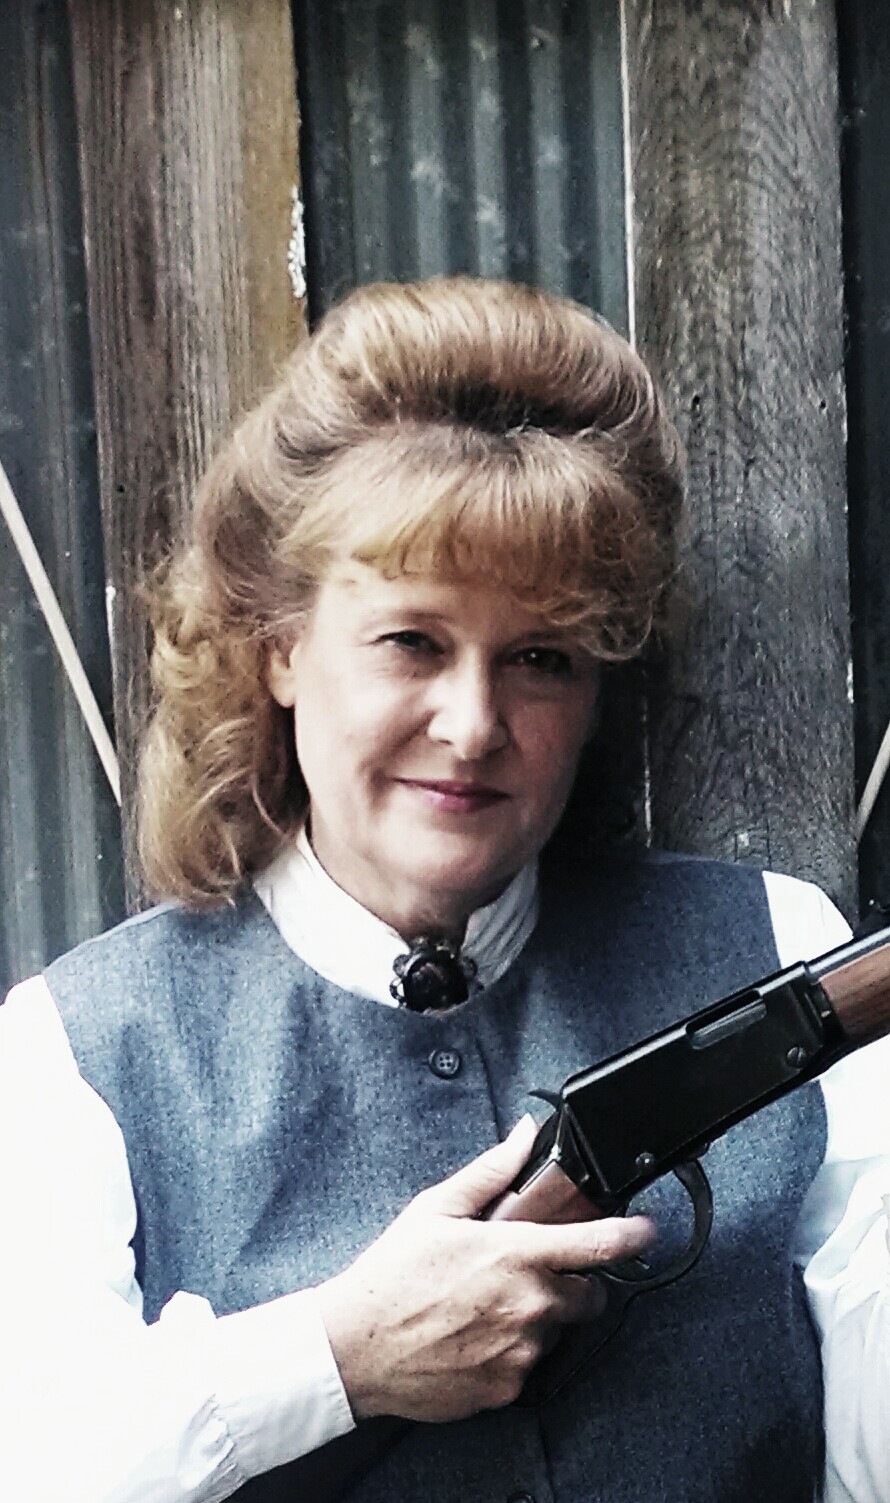 Sheila Cochran Western character: photo taken by husband